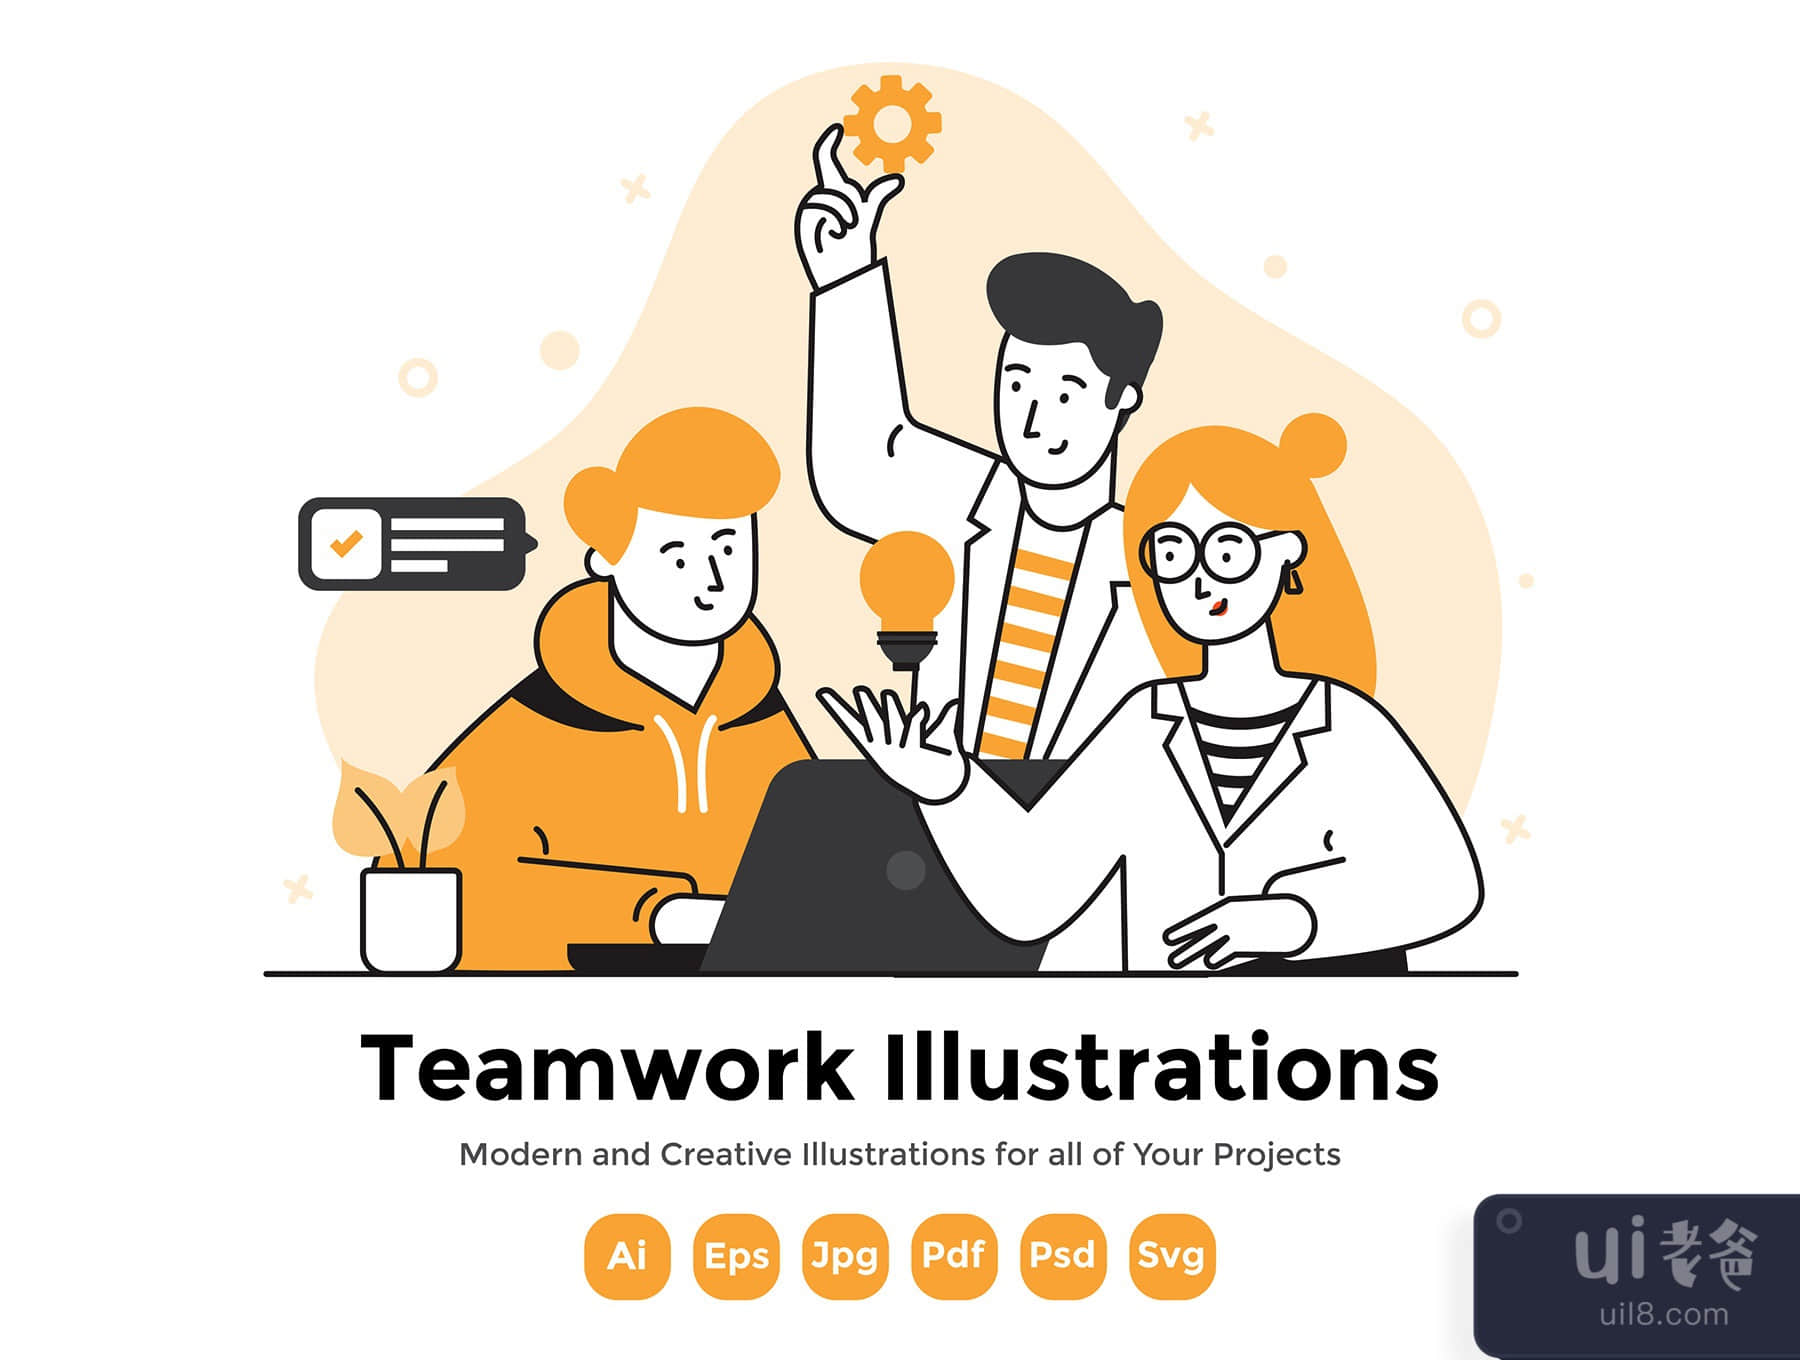 团队合作插图集(Teamwork Illustration Set)插图